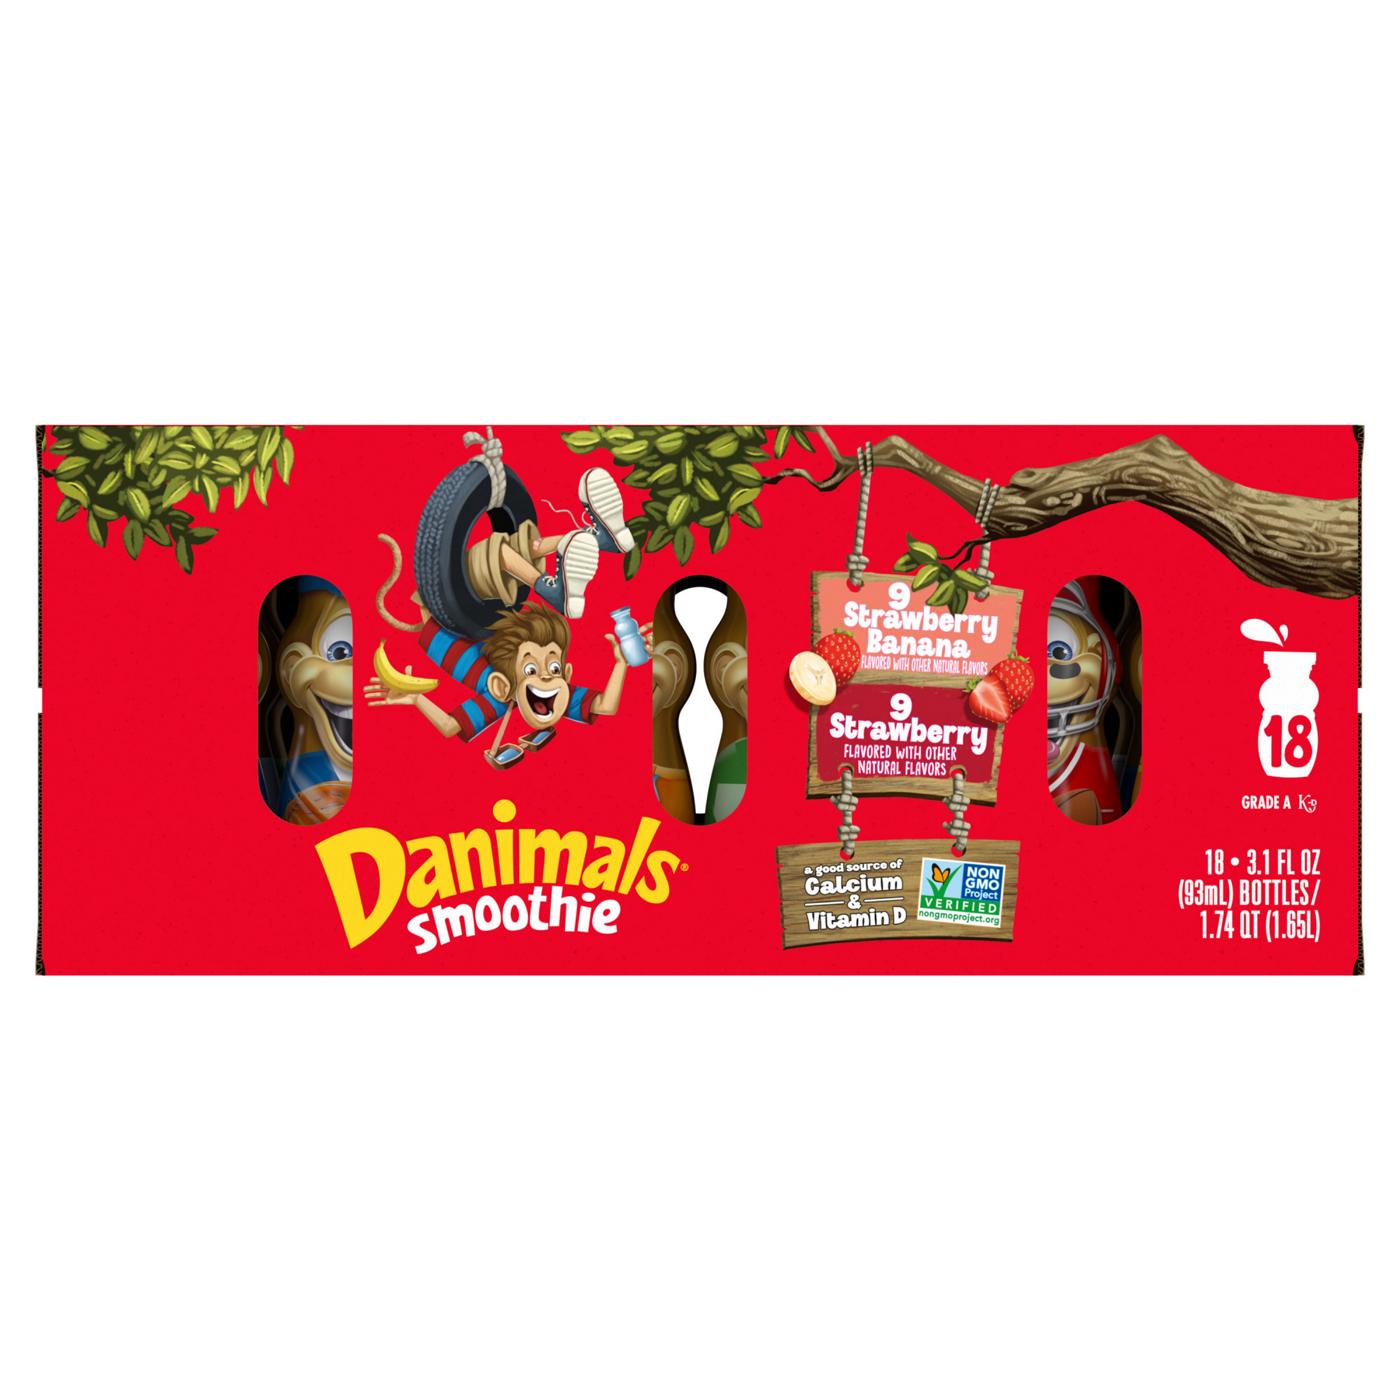 Dannon Danimals Smoothie Strawberry & Strawberry & Banana 3.1 oz